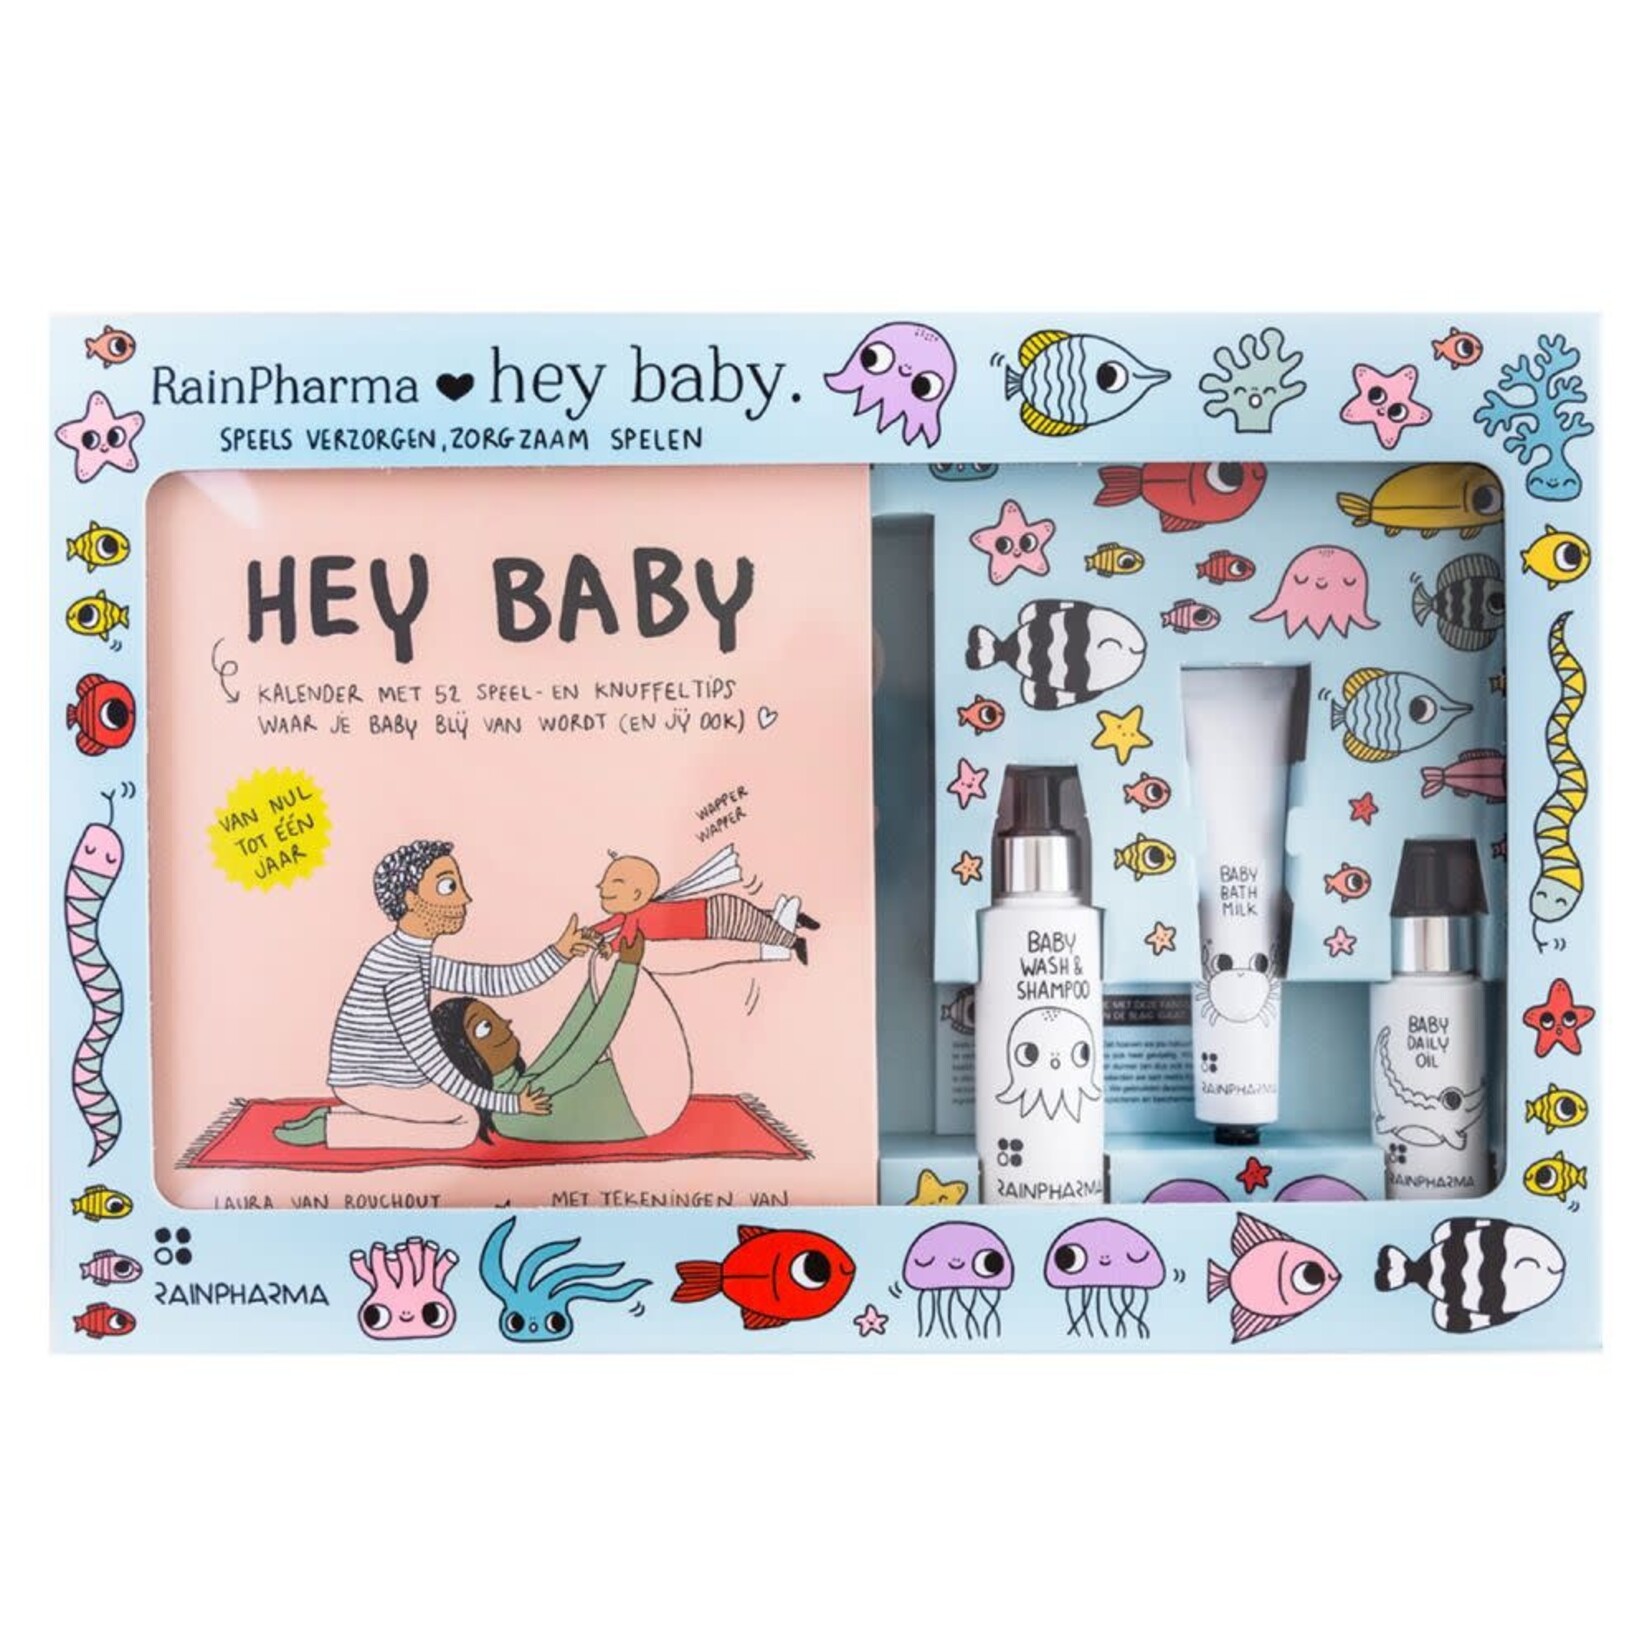 Rainpharma Rainpharma - Hey baby gift box (Eva Mouton)